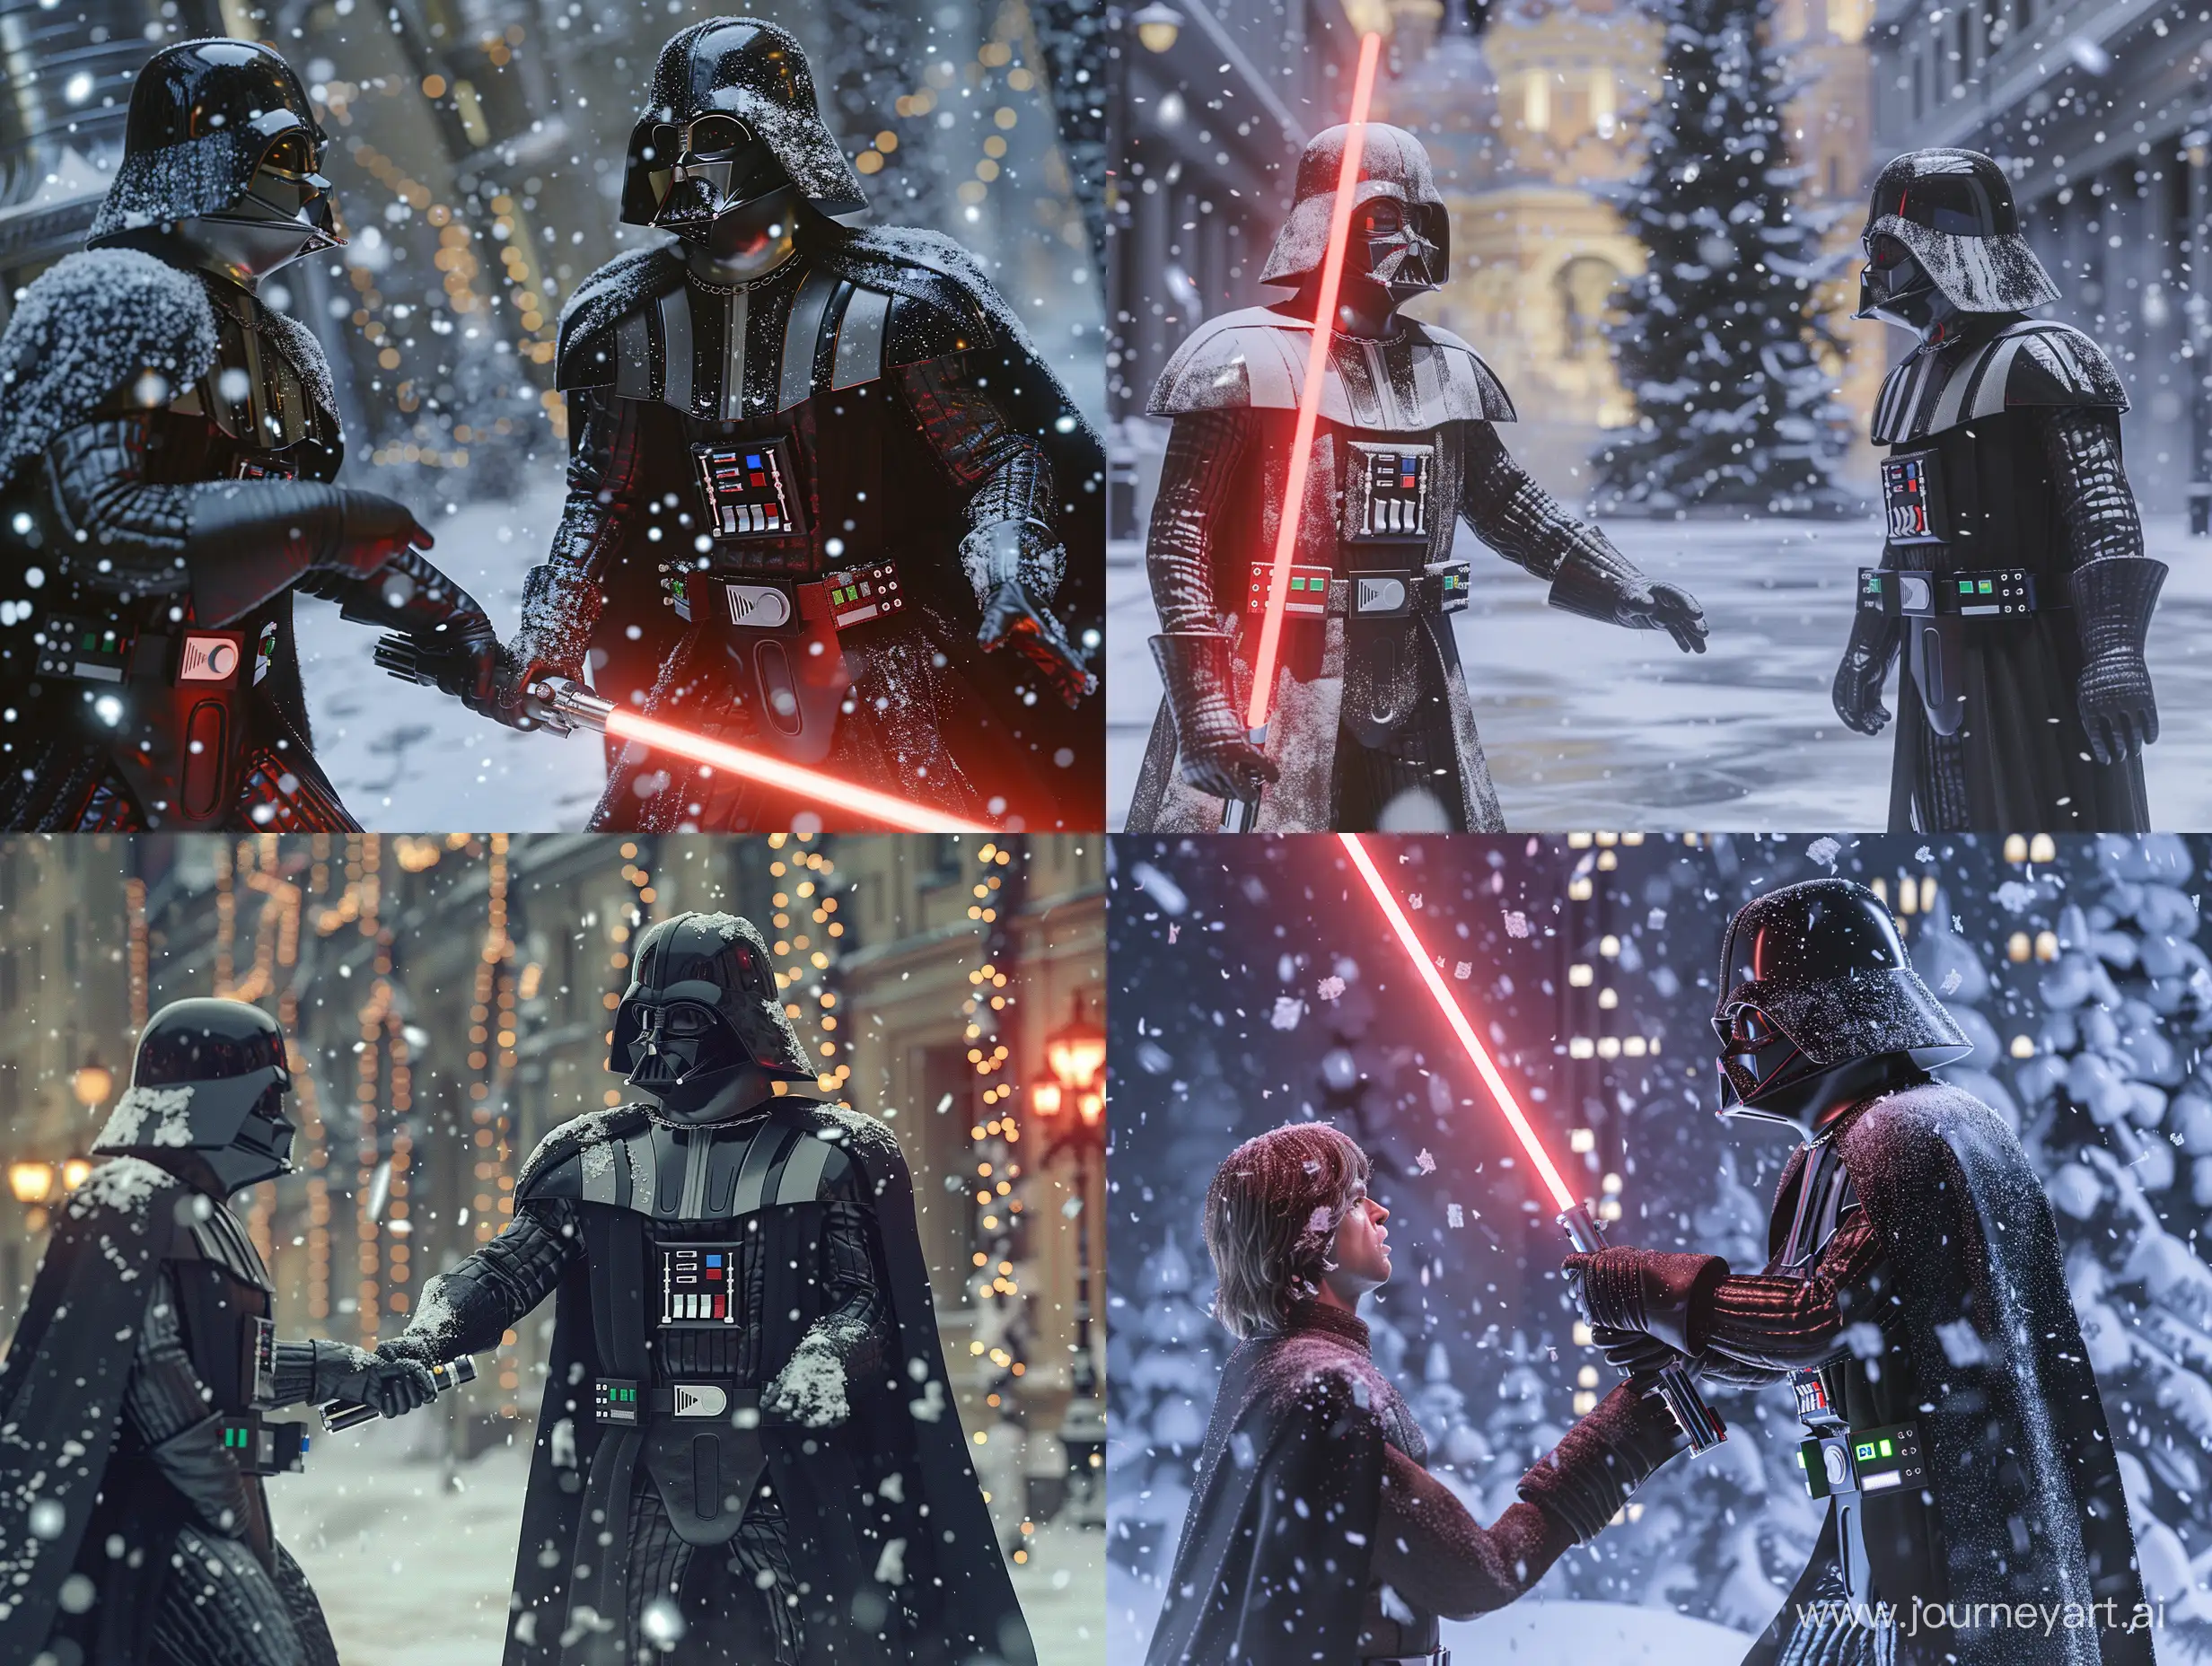 Epic-Duel-Luke-Skywalker-vs-Darth-Vader-in-Moscows-Winter-Snowfall